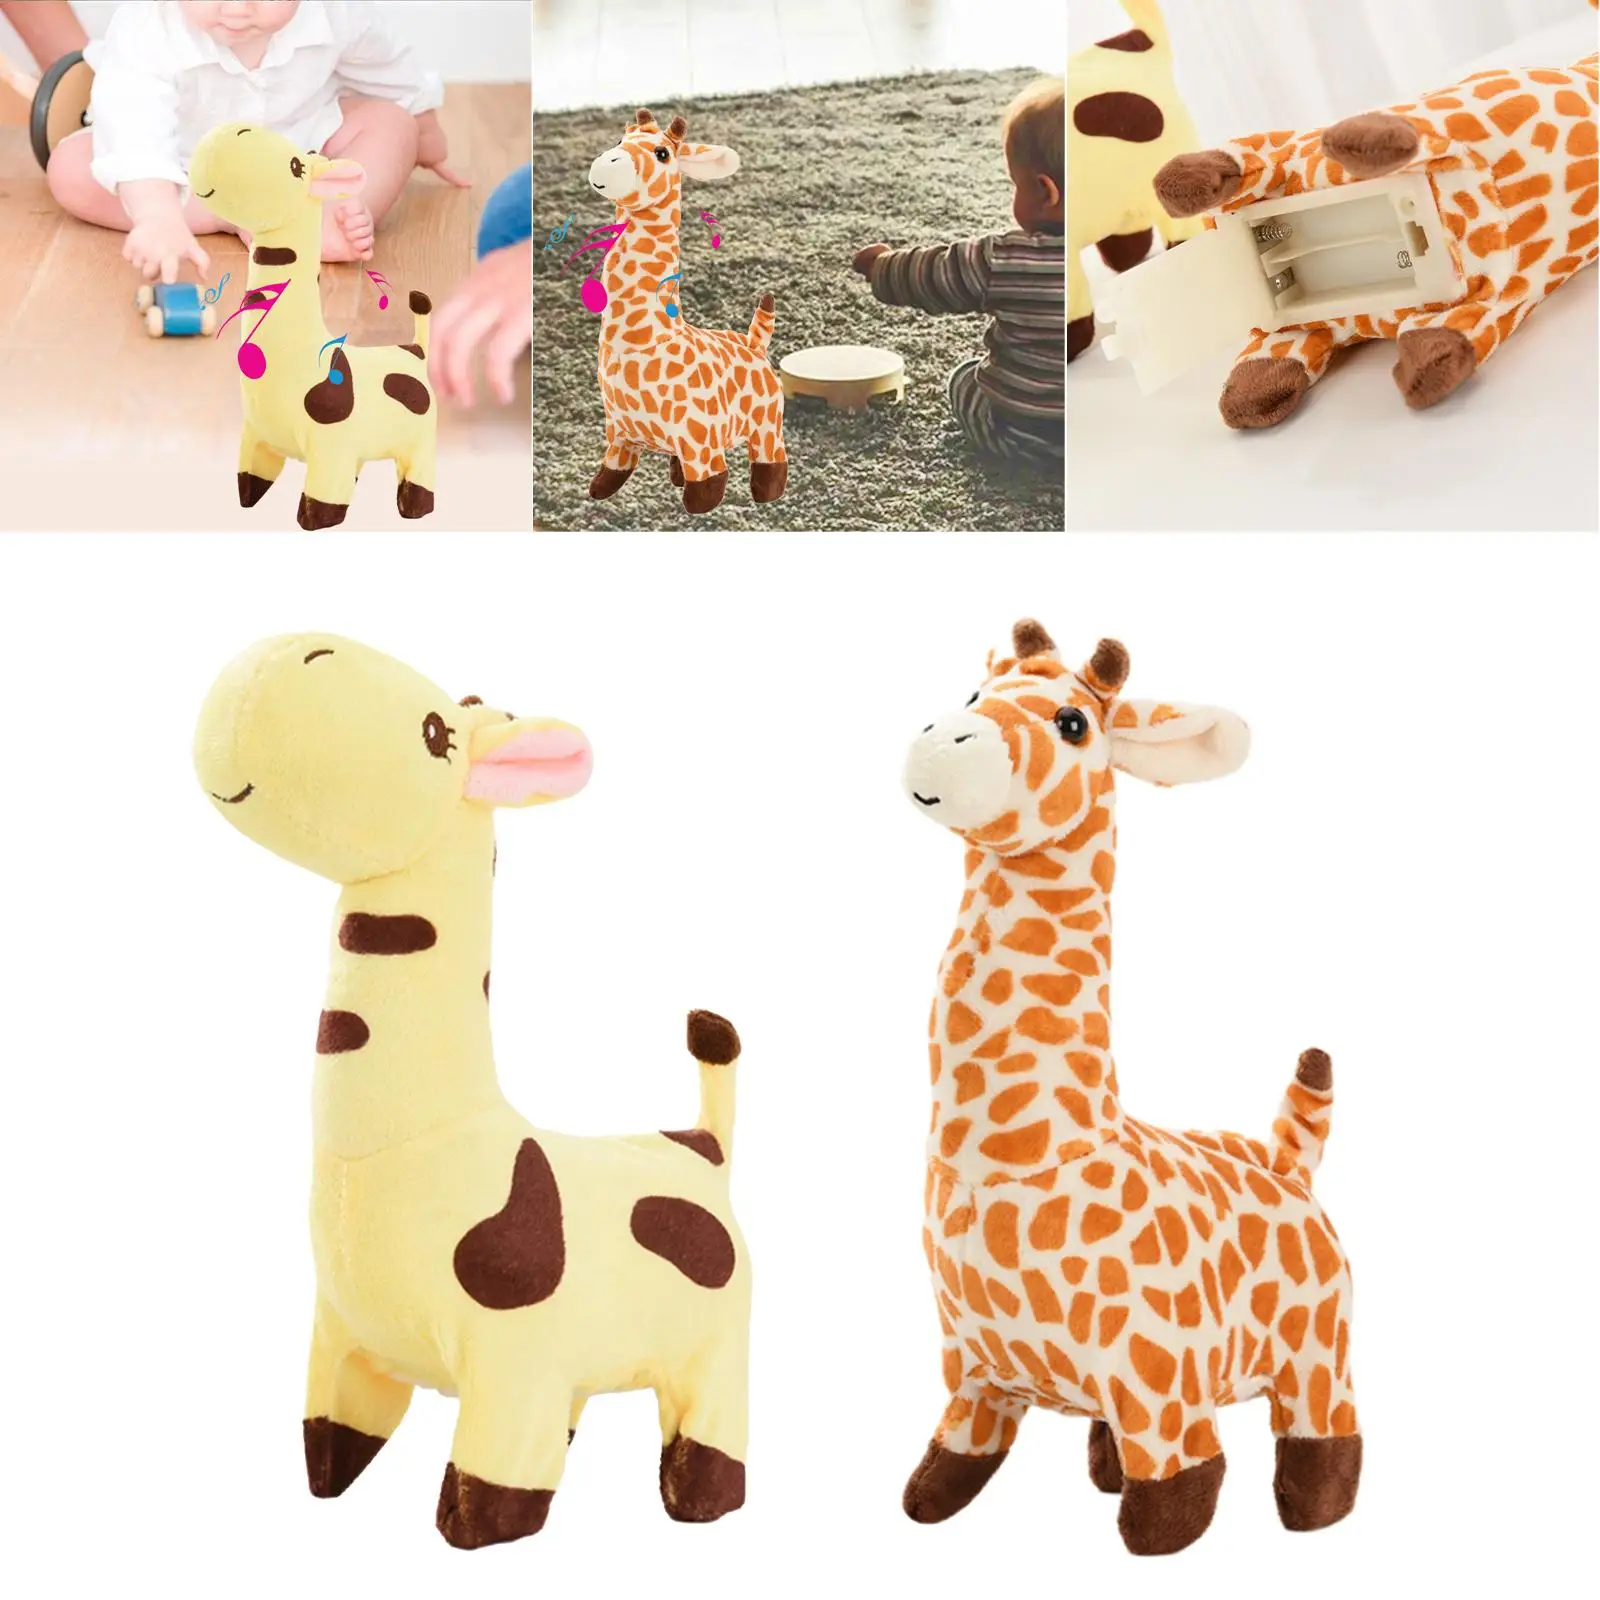 Giraffe Toy-- Simulation Display Singing Adorable Electronic Shaking Tail Flopsie Giraffe Doll, Giraffe Robot for Easter Gift